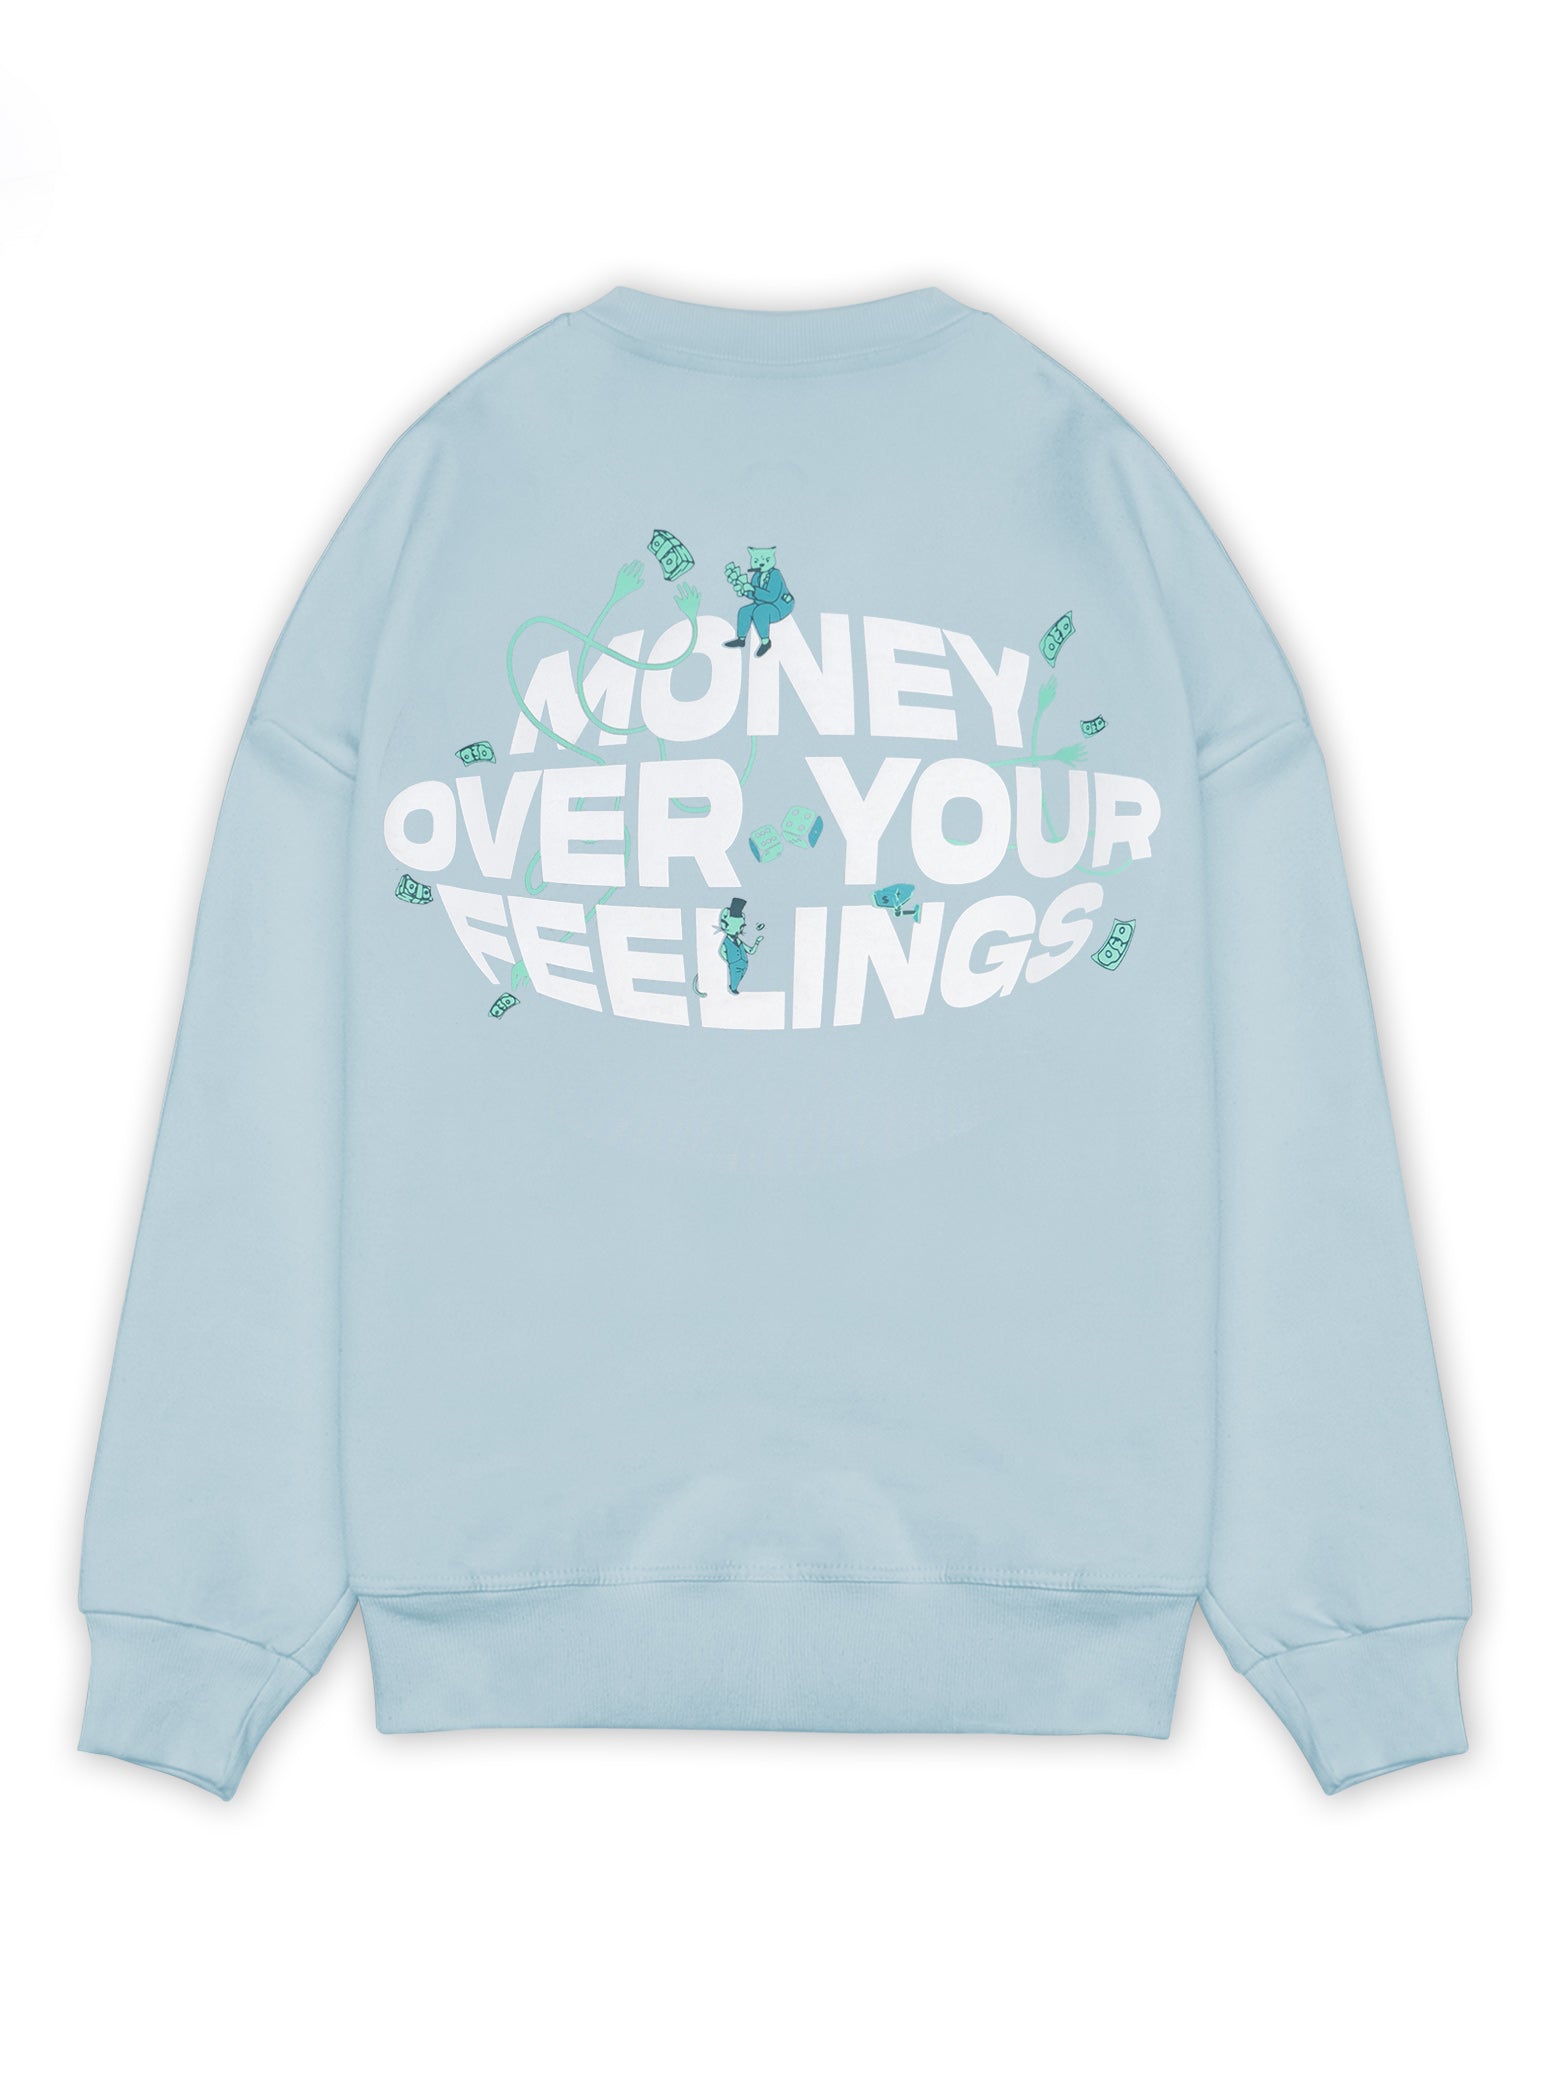 Money Over Your Feelings